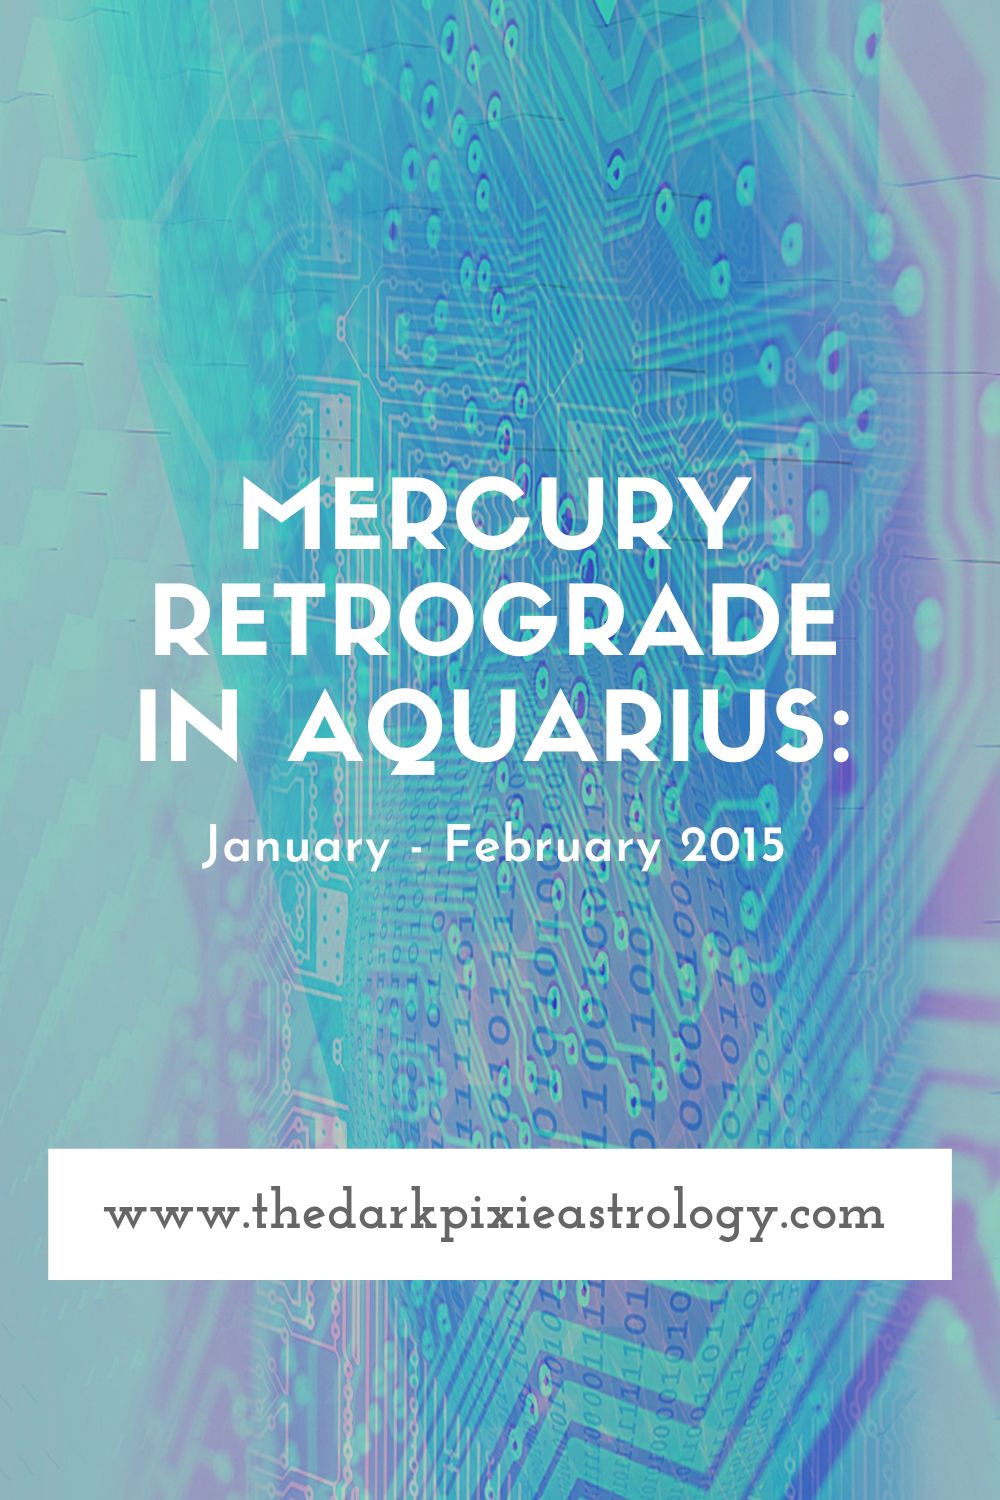 Mercury Retrograde in Aquarius: January - February 2015 - The Dark Pixie Astrology